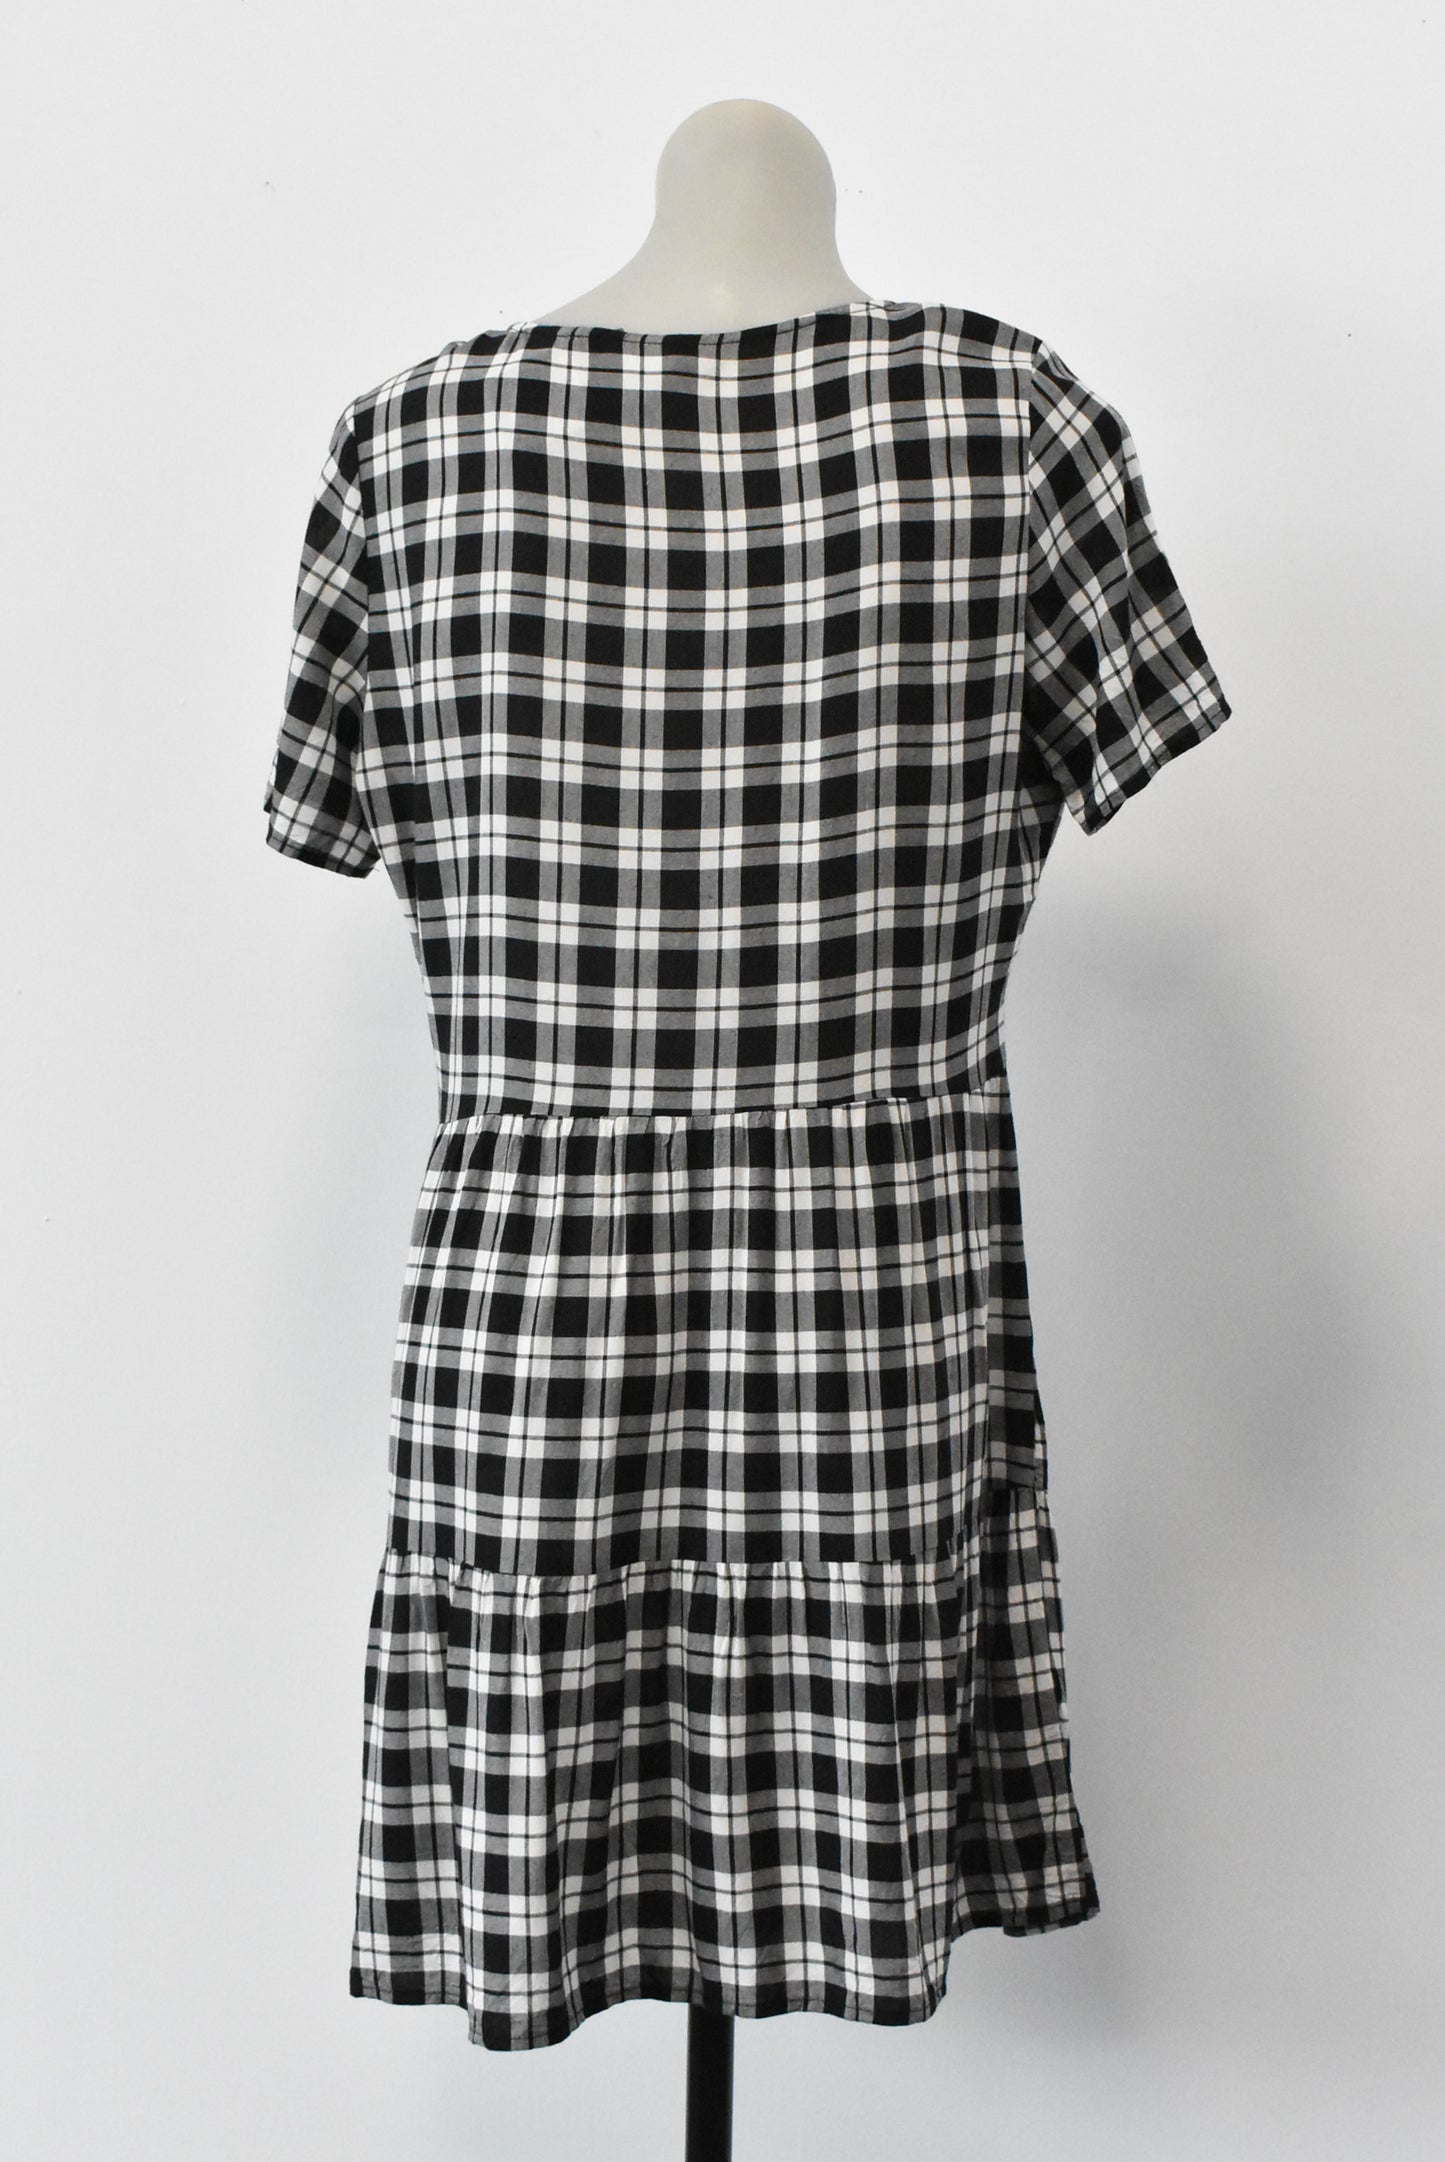 H&M Divided black and white plaid dress, 10